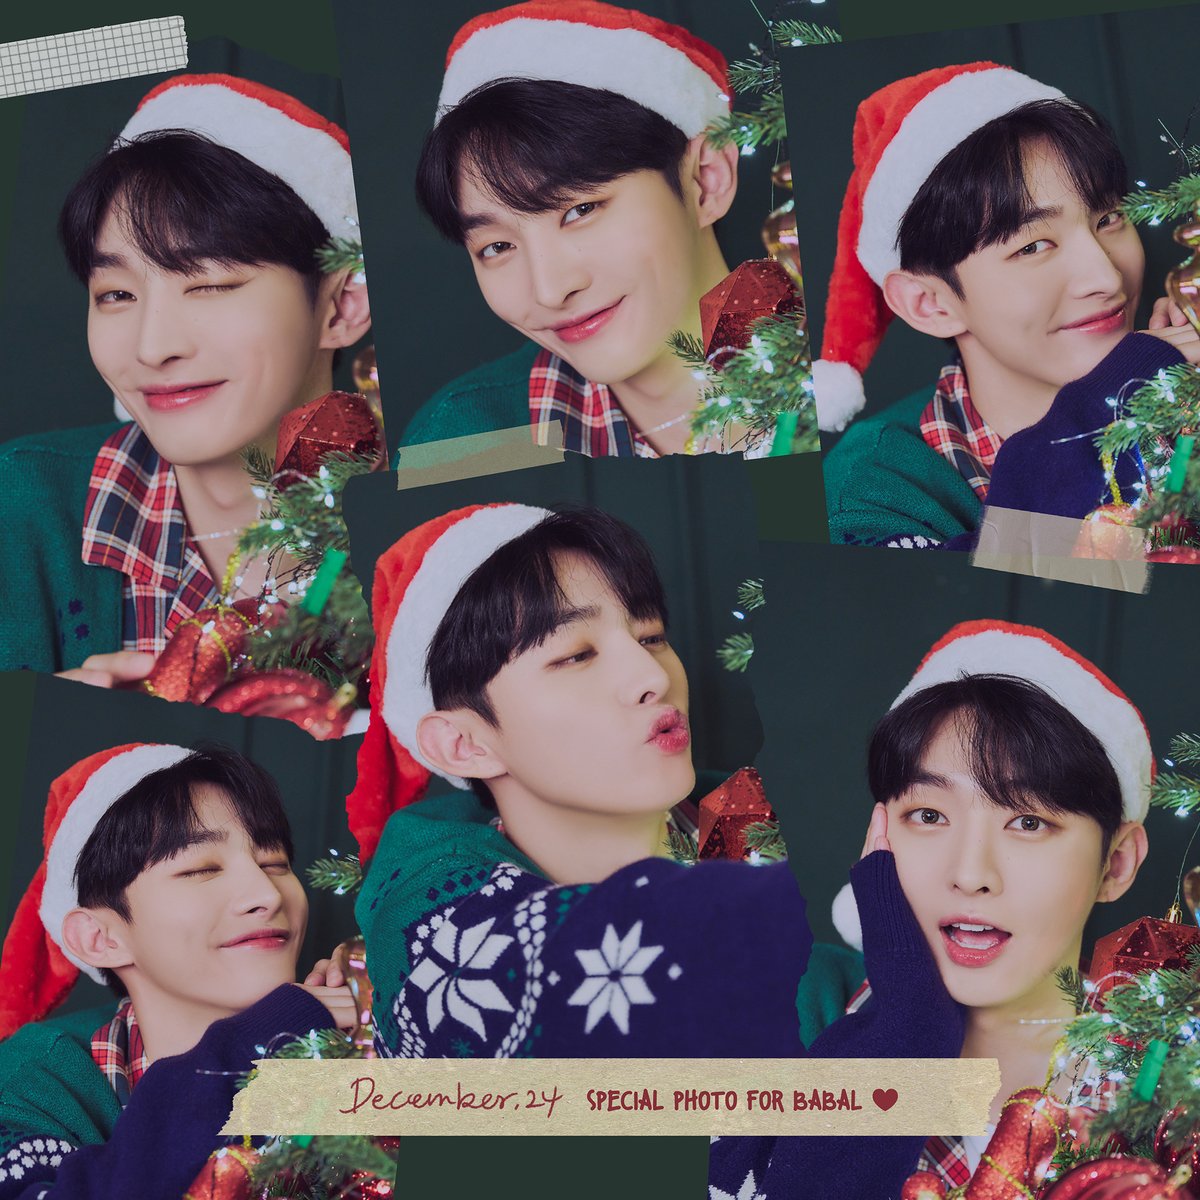 Yoon Ji-sung, new song 'December. 24' released... Christmas season song